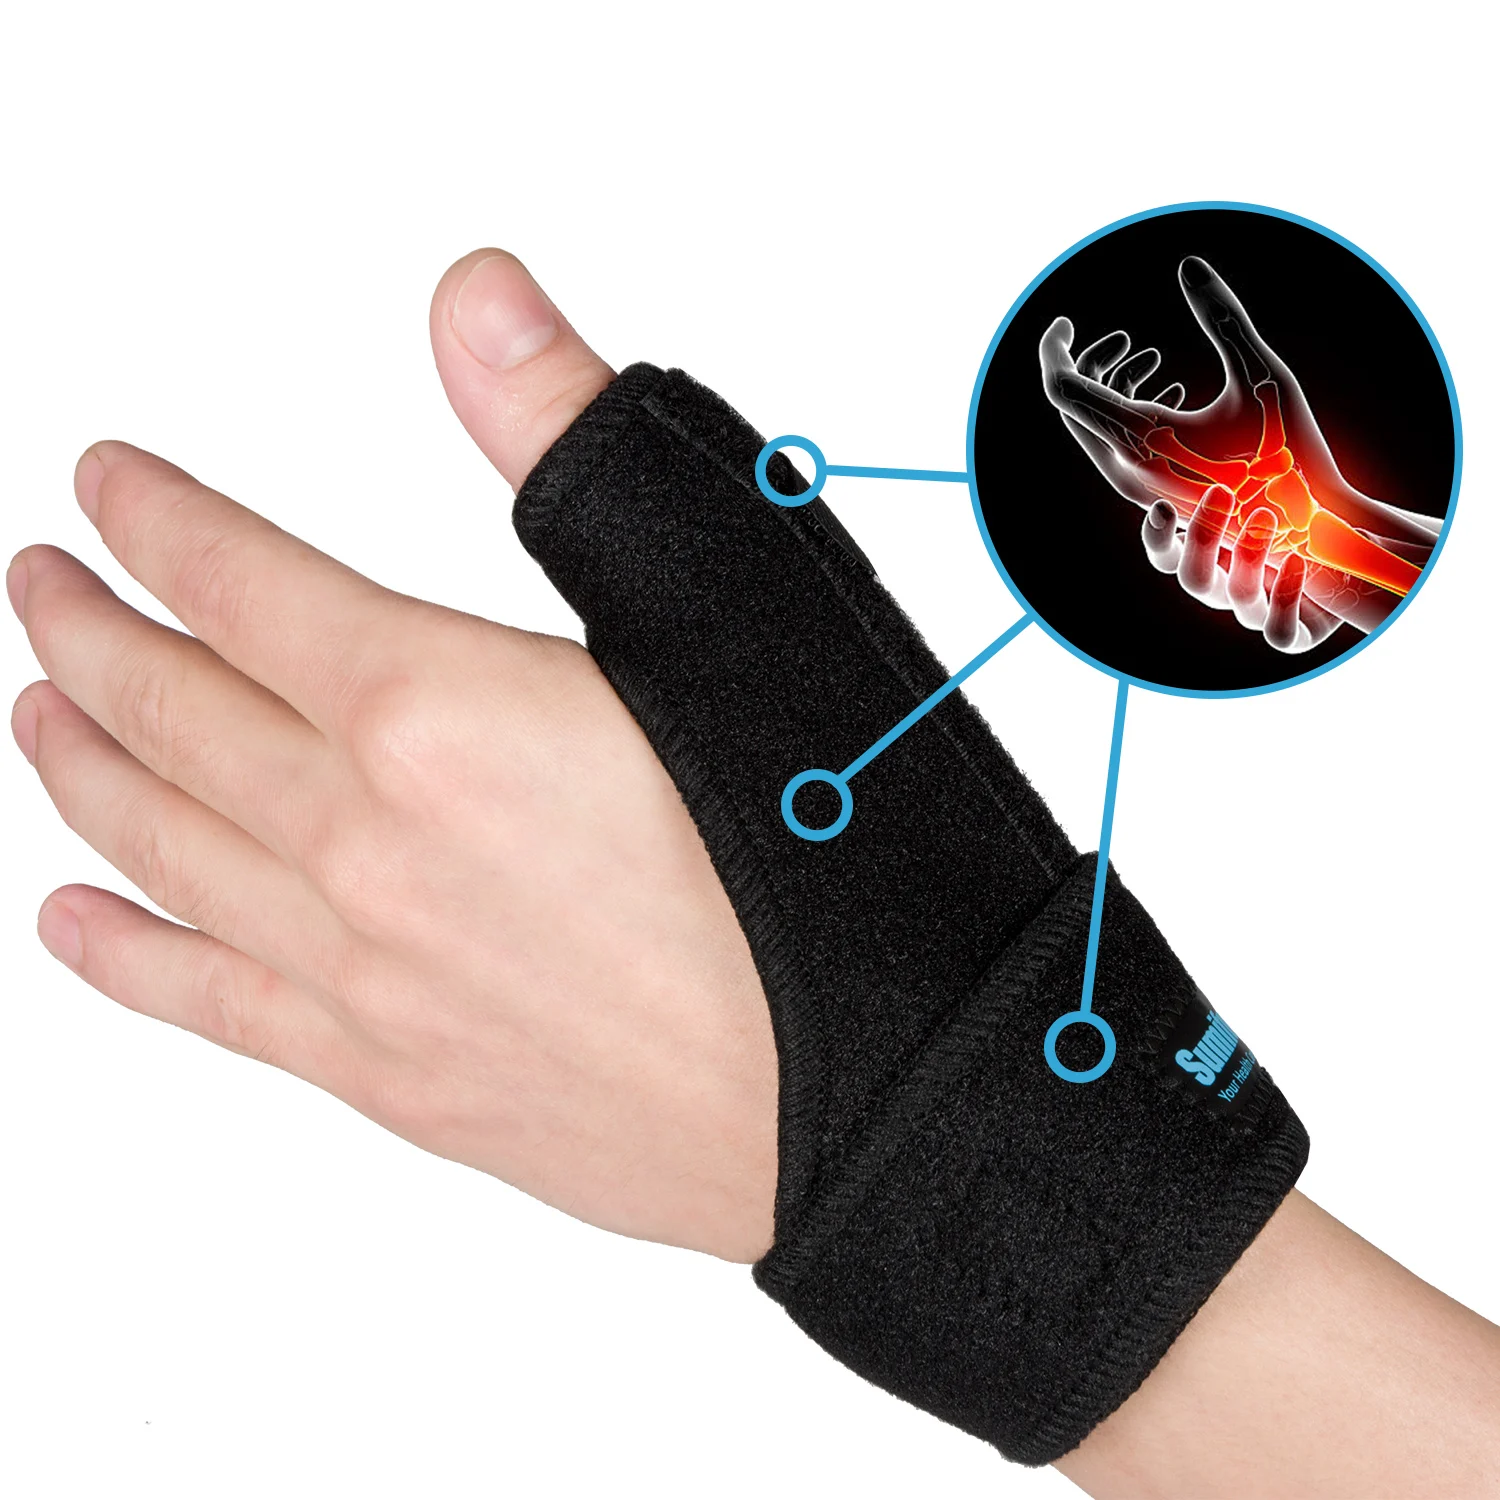 1pcs Hand Protecor Thumb Spica Wrist Brace Splint Support for Arthritis Tendonitis Carpal Tunnel Pain Relief C1572 ортез шина wrist support 880 medi 1 правый